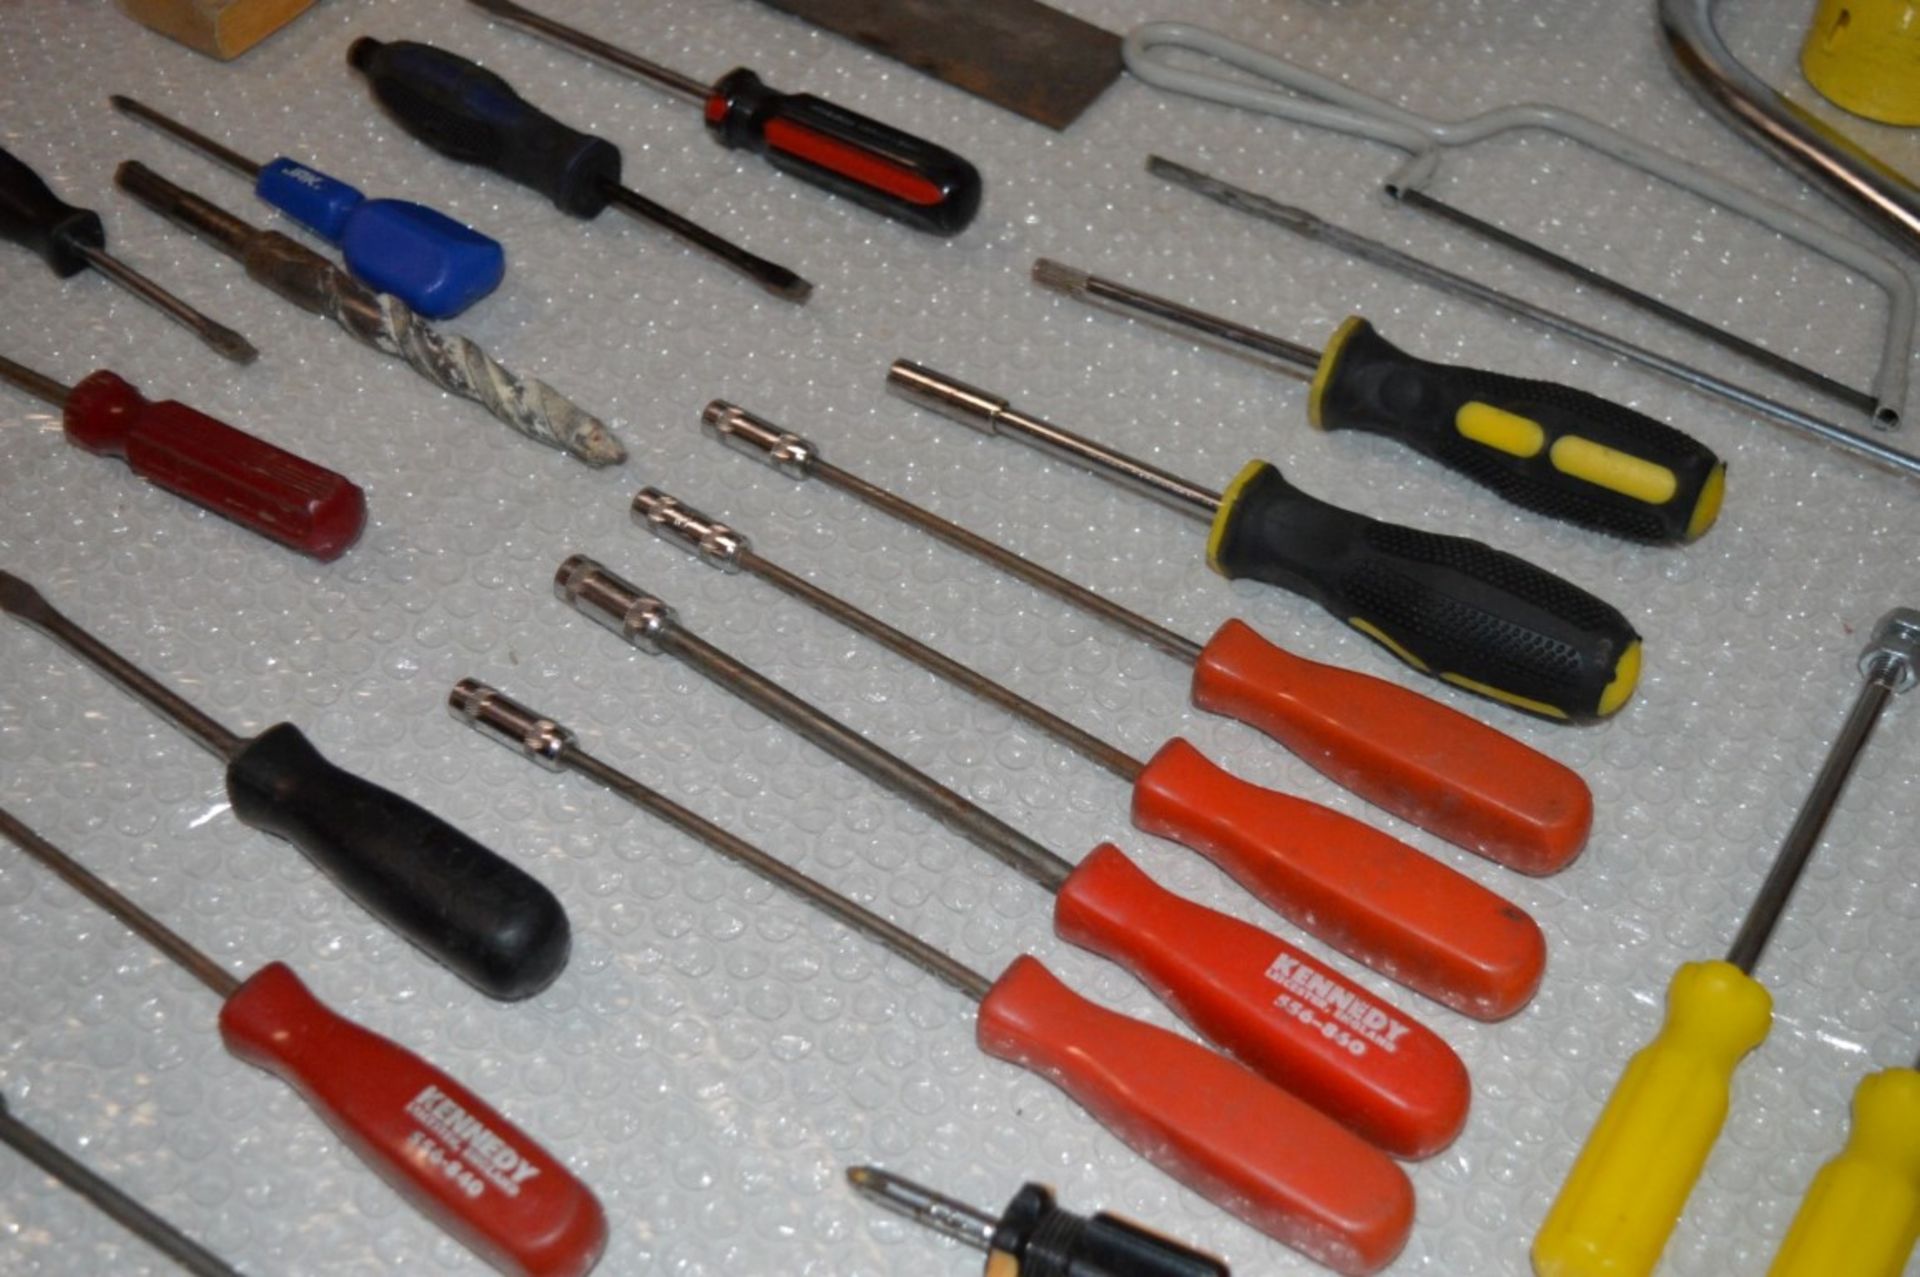 54 x Various Hand Tools Iincluding Screwdrivers, Saws, Bores, Drill Bits, Allen Keys, Hex Head Screw - Image 13 of 15